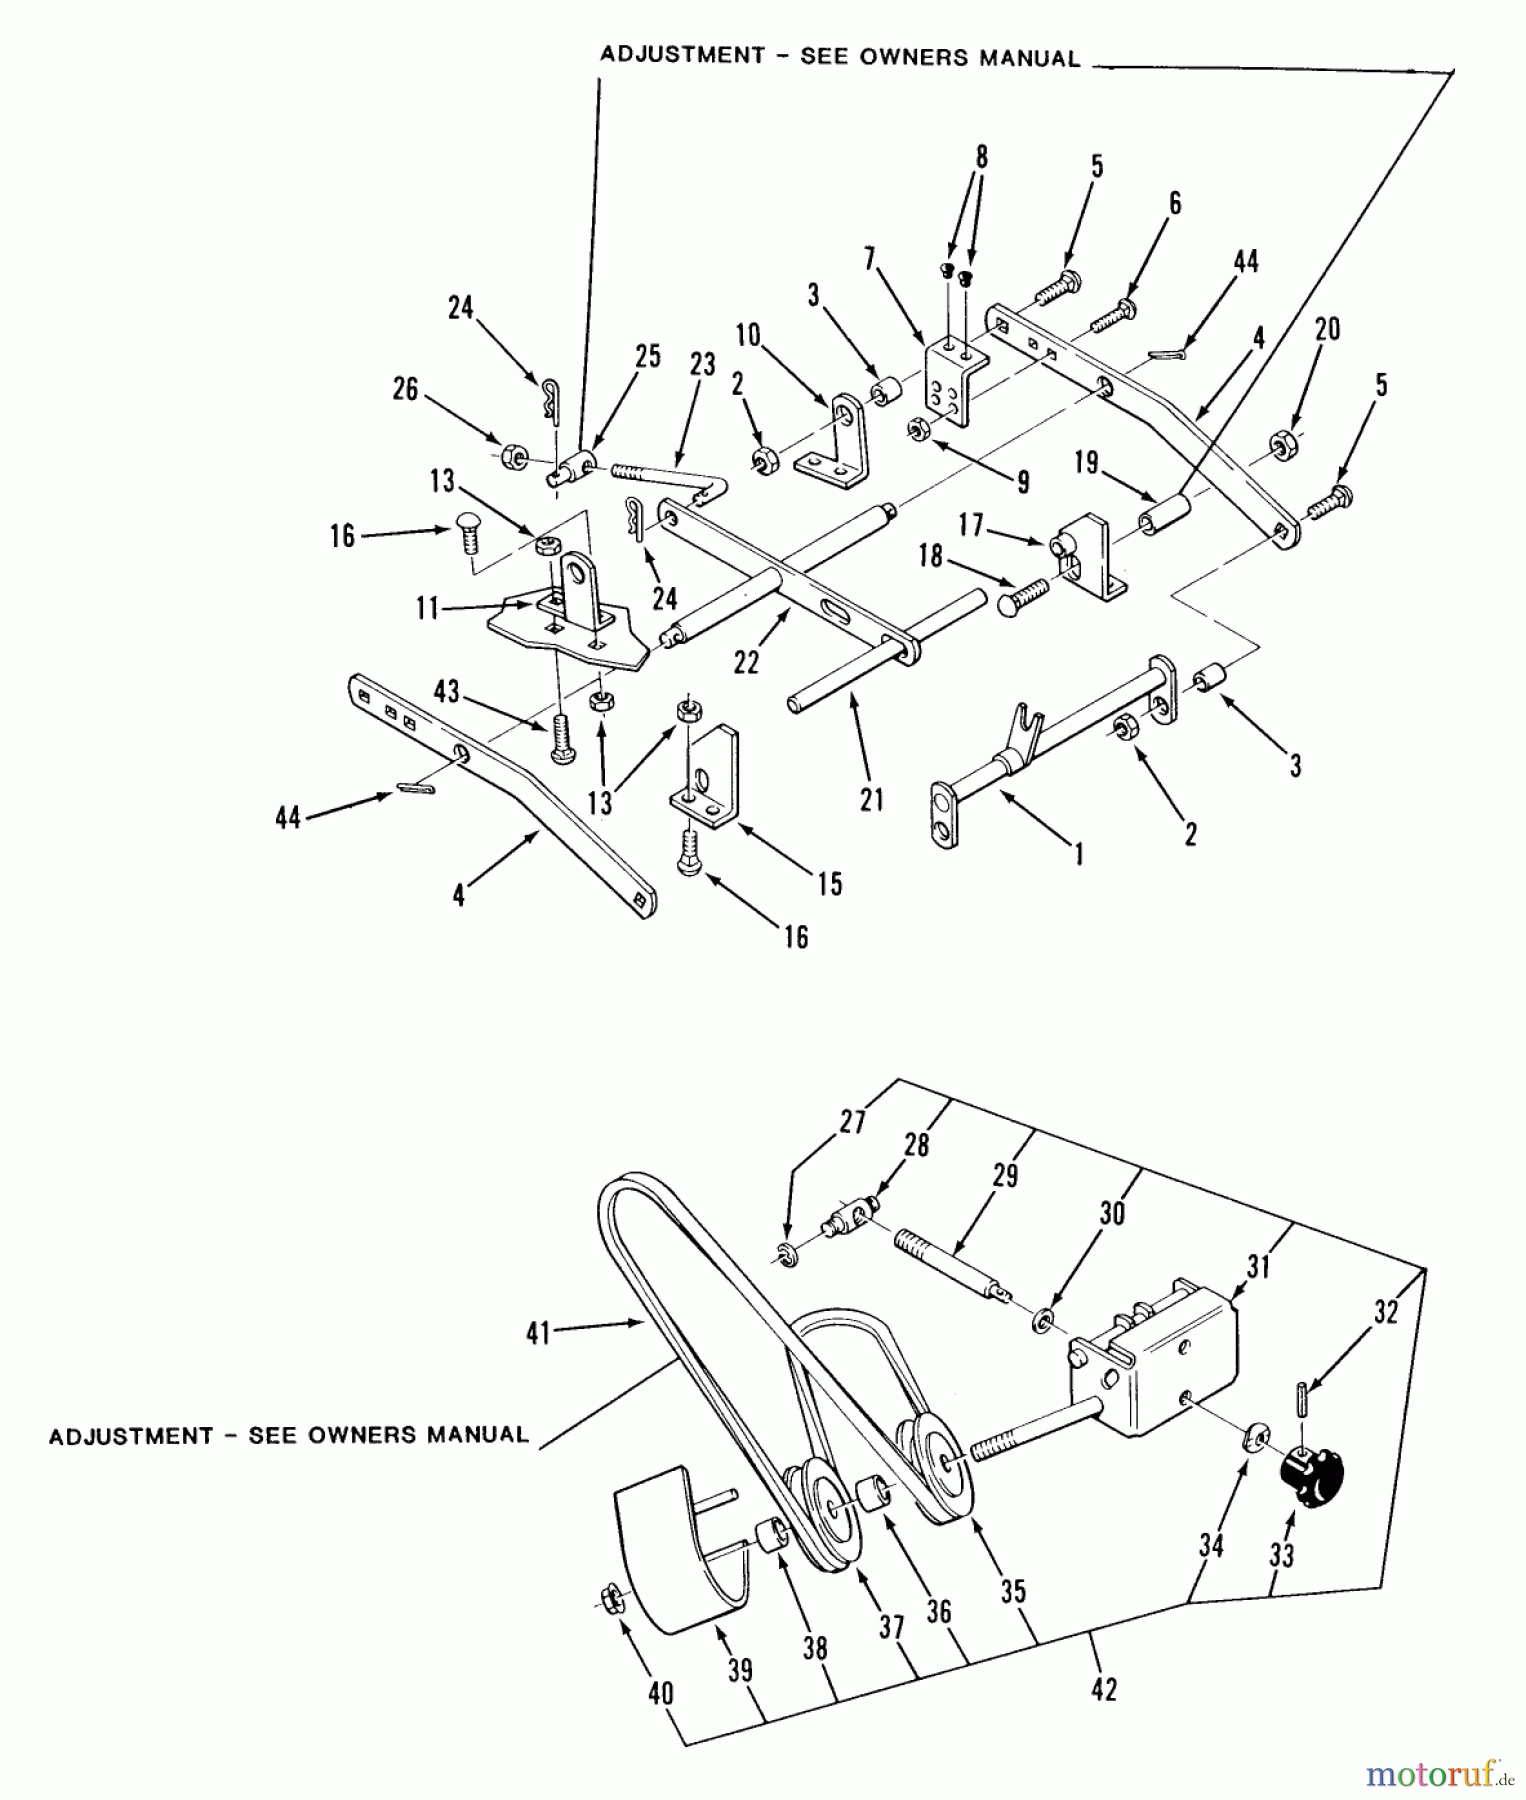  Toro Neu Mowers, Deck Assembly Only E5-42MR01 - Toro 42